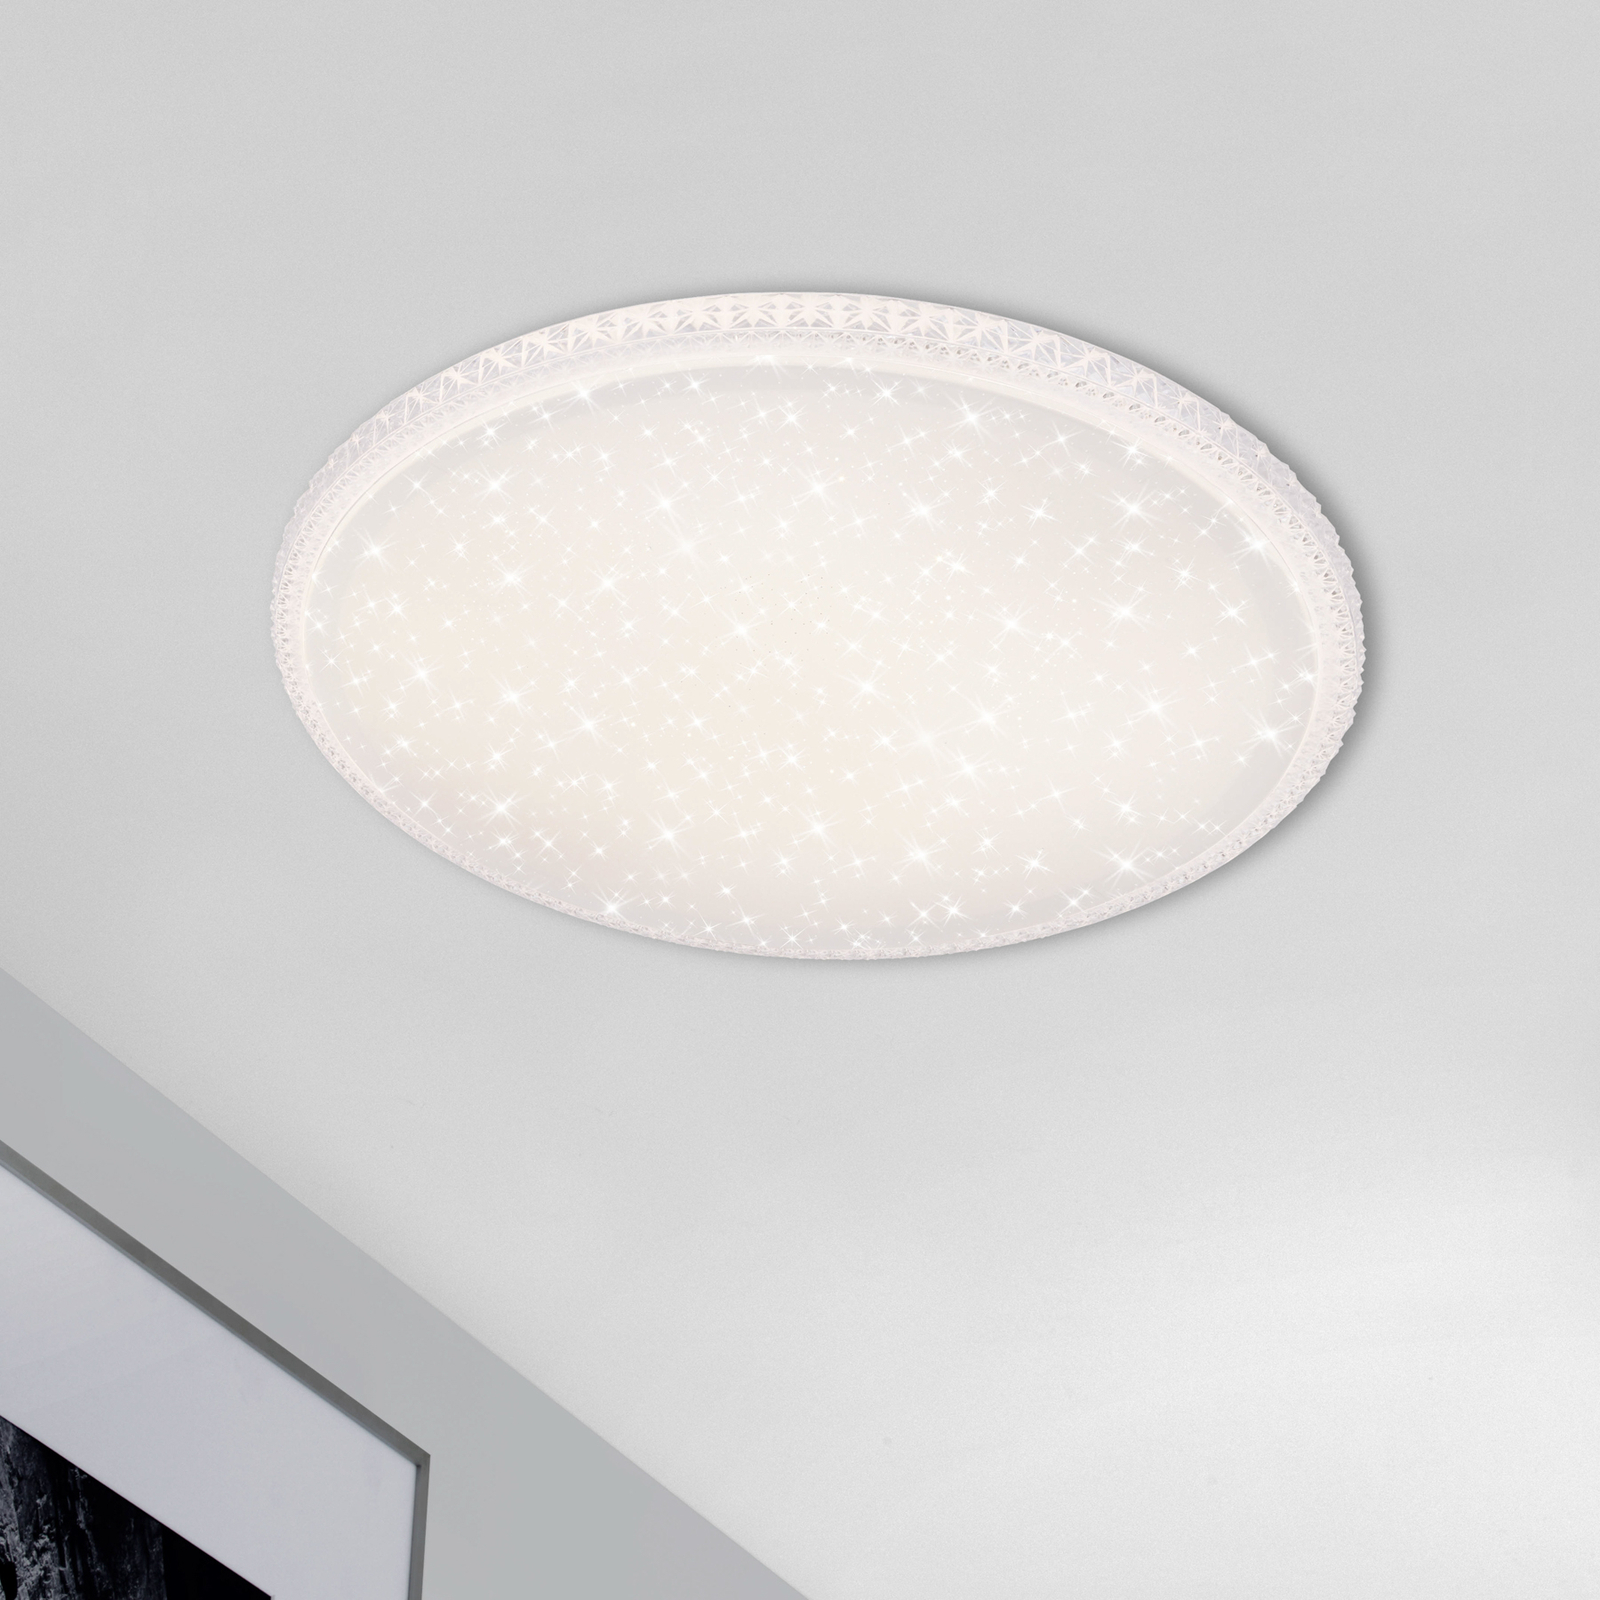 STYLE LED plafondlamp, afstandsbediening